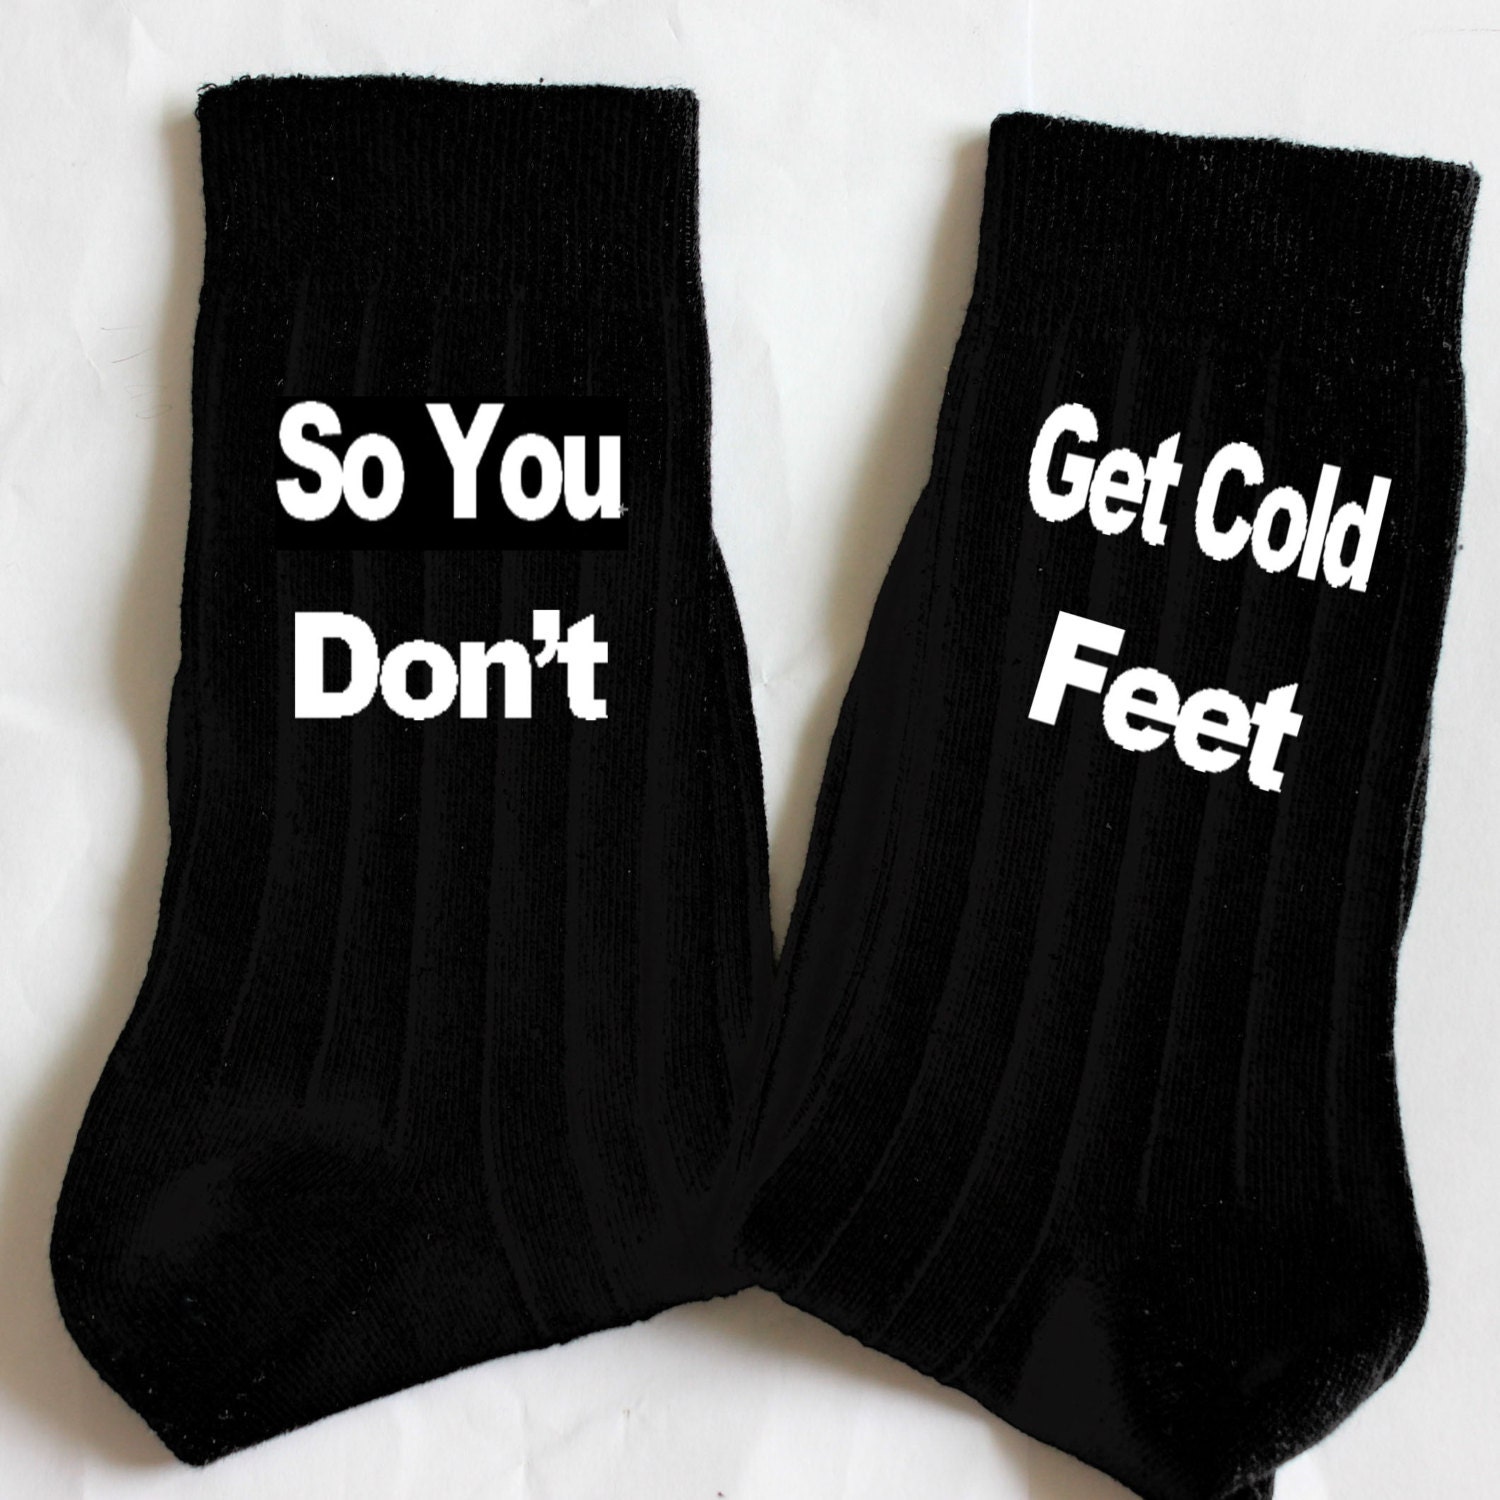 groom socks-so you don't get cold feetcold feet groom